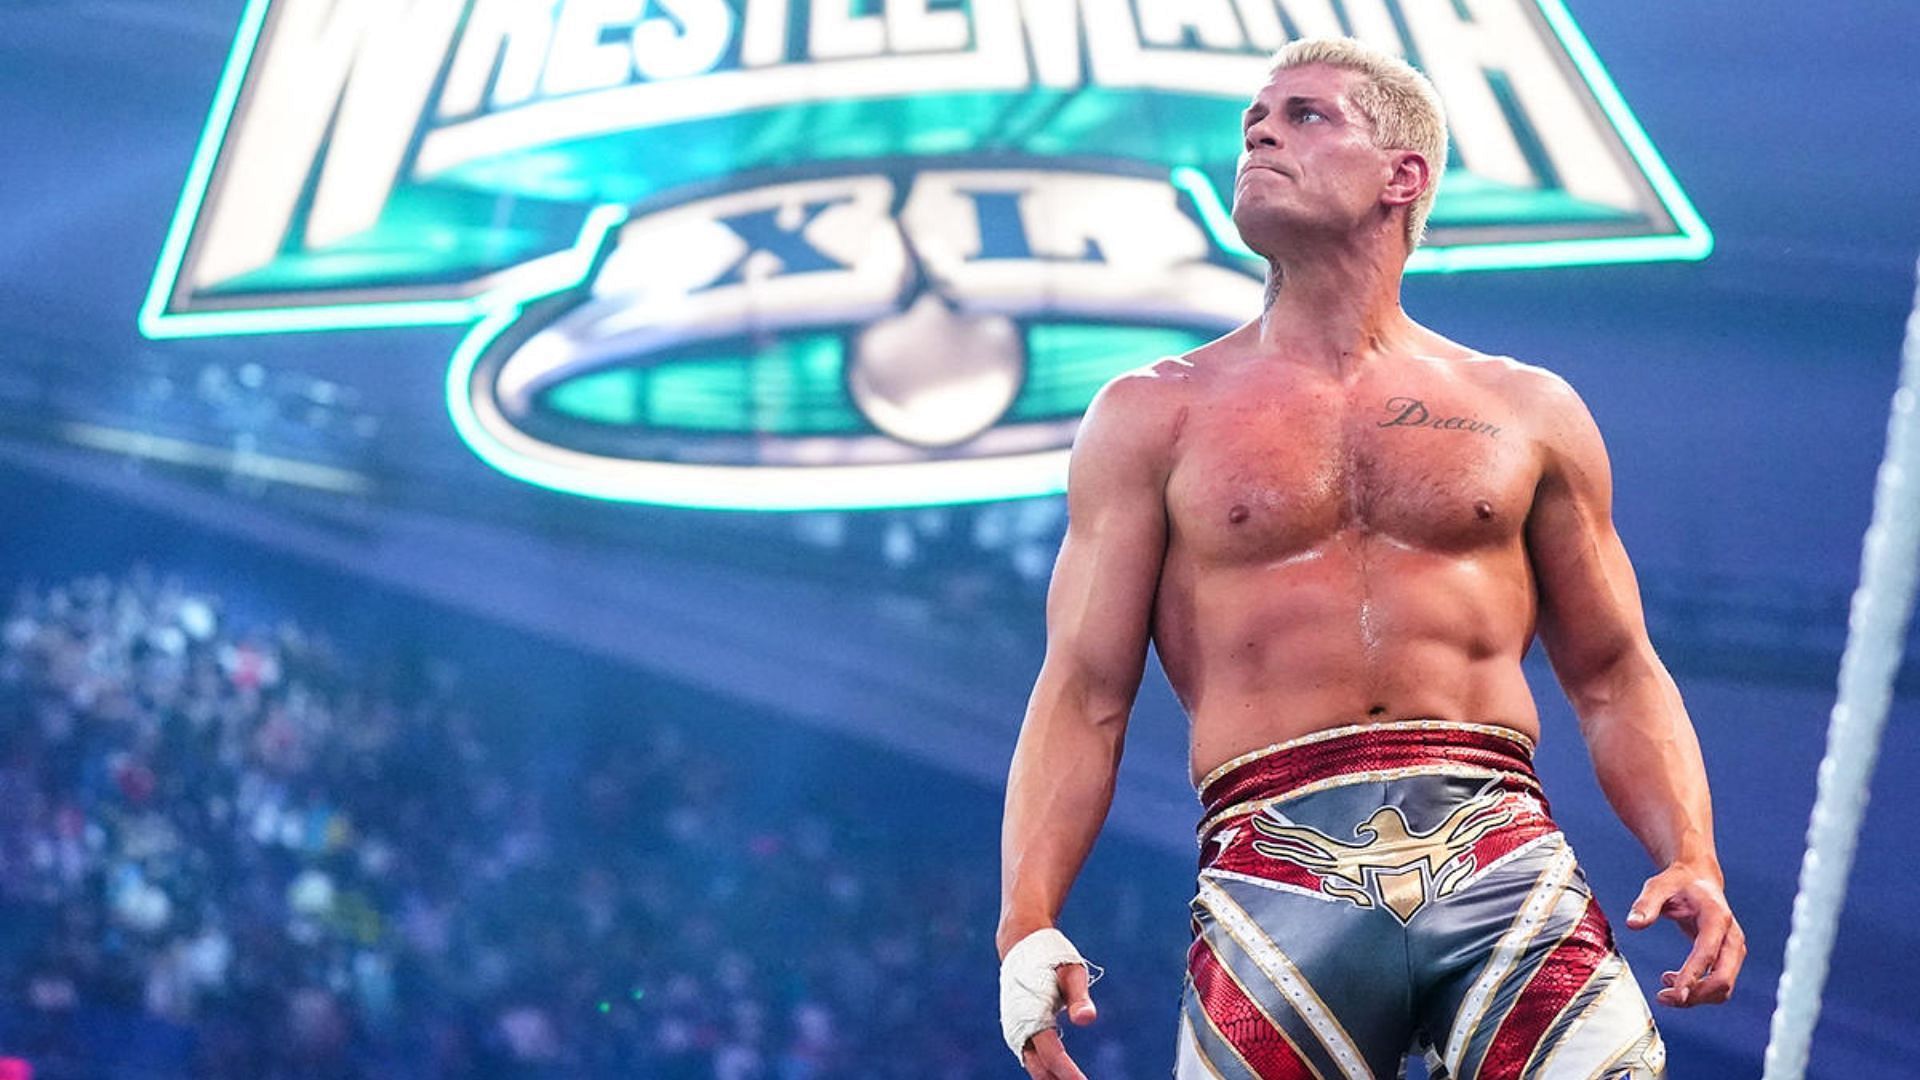 Cody Rhodes will main event WrestleMania 40